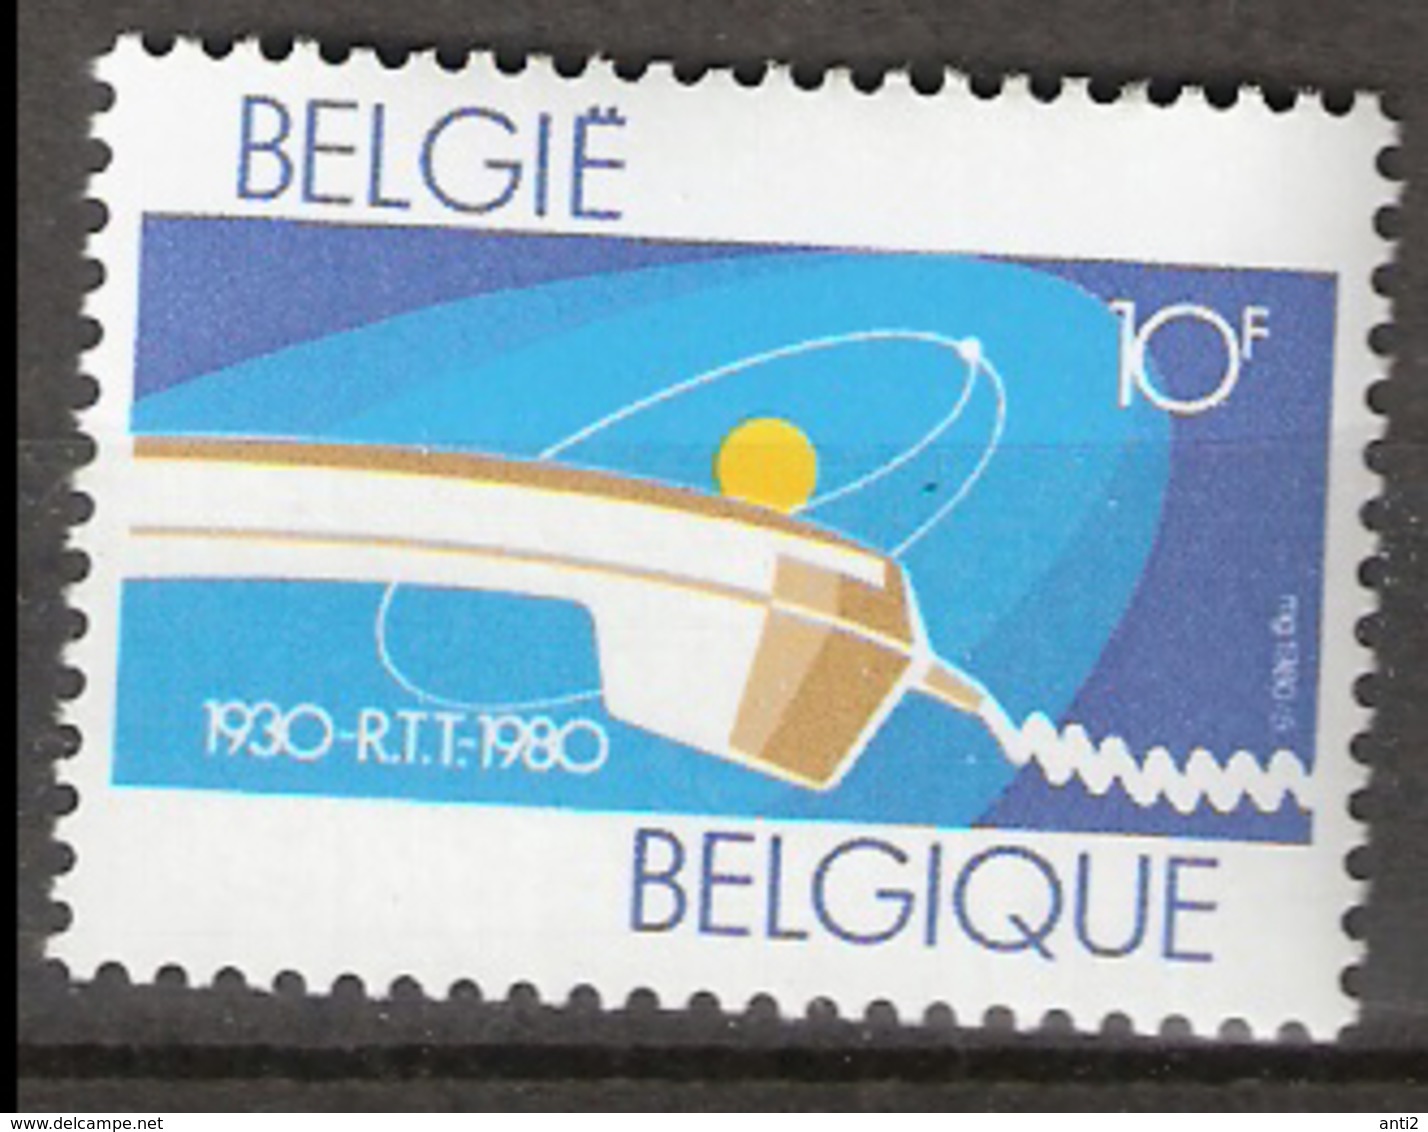 Belgium 1980 50 Years Of State Telegraph And Telephone Administration (RTT), Mi 2020, MNH(**) - Unused Stamps